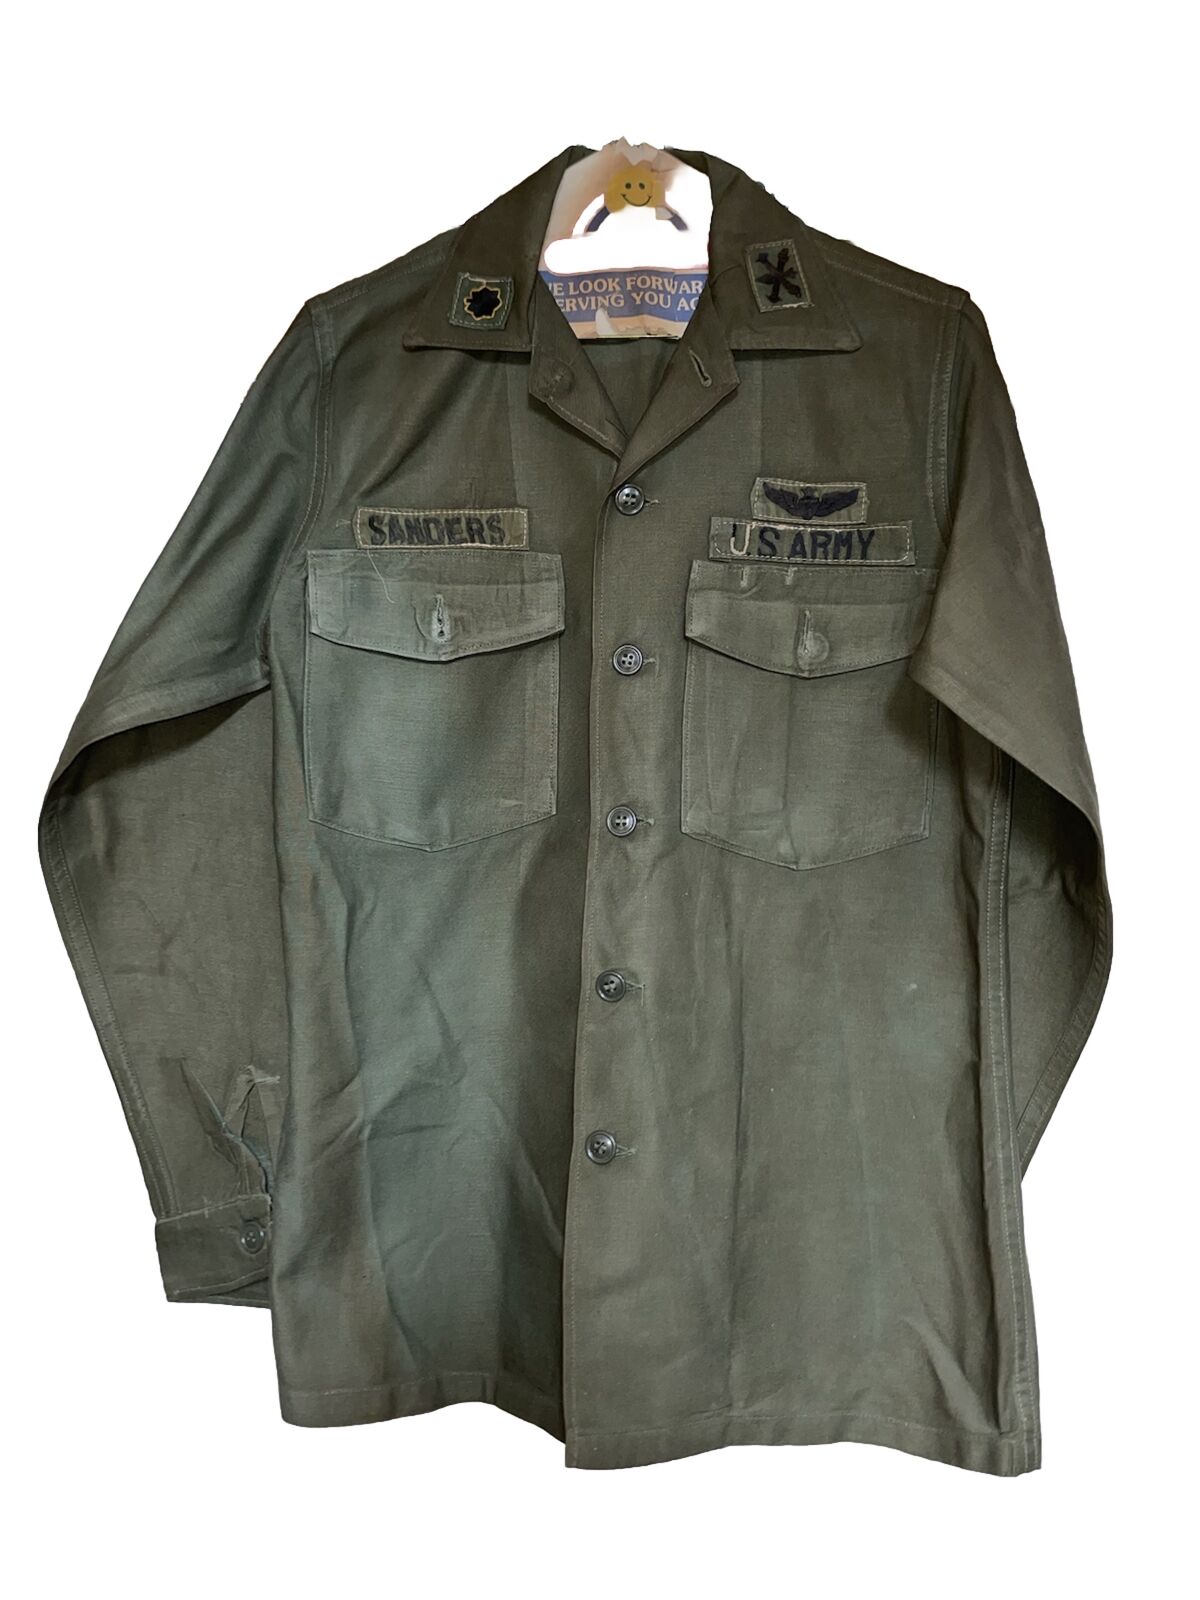 Vintage OG107 / Fatigue Shirt, Size 14 1/2 x 33 US Army Officers 1960\'S